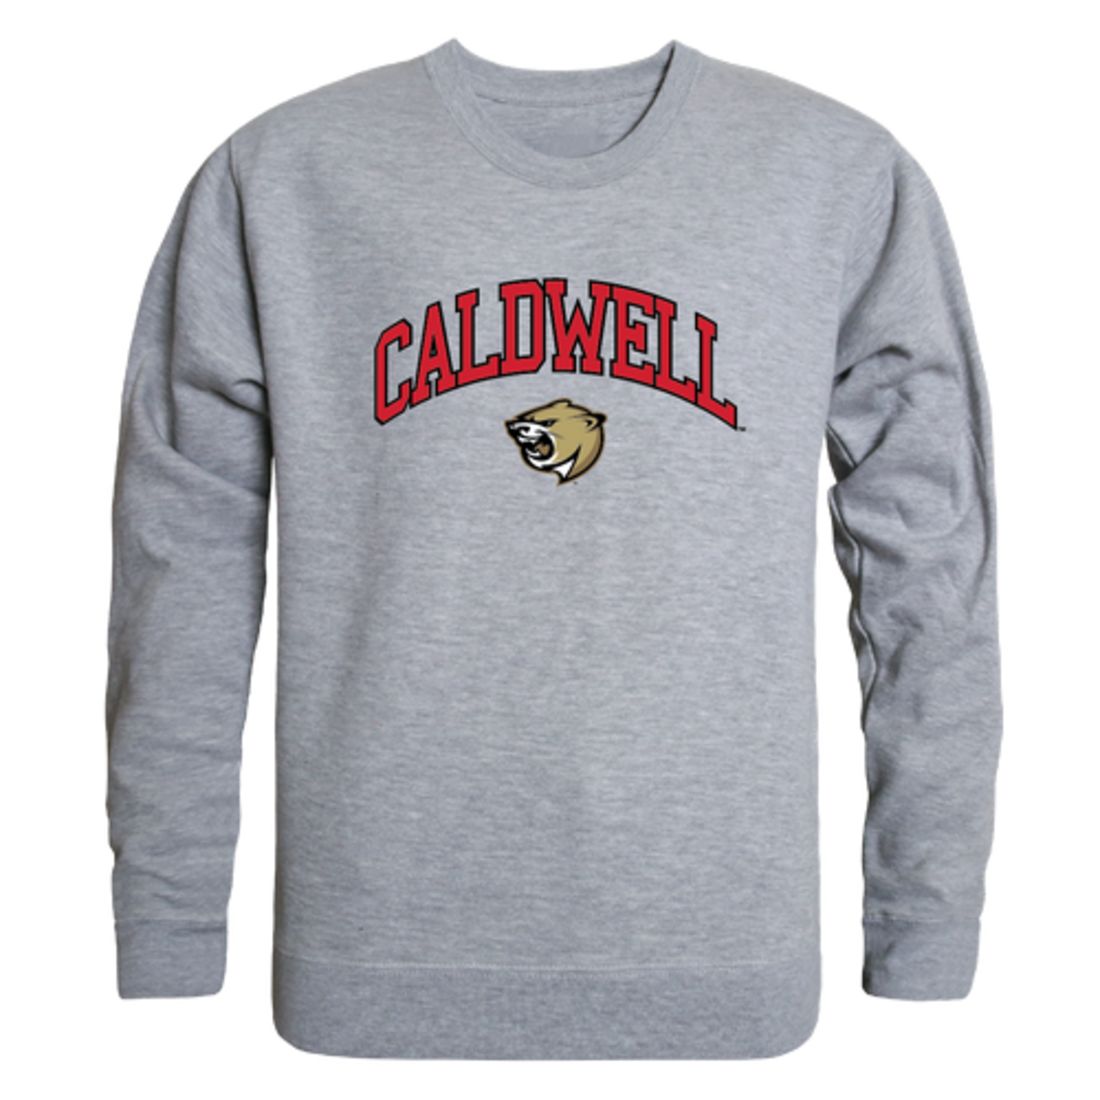 Caldwell University Cougars Campus Crewneck Sweatshirt